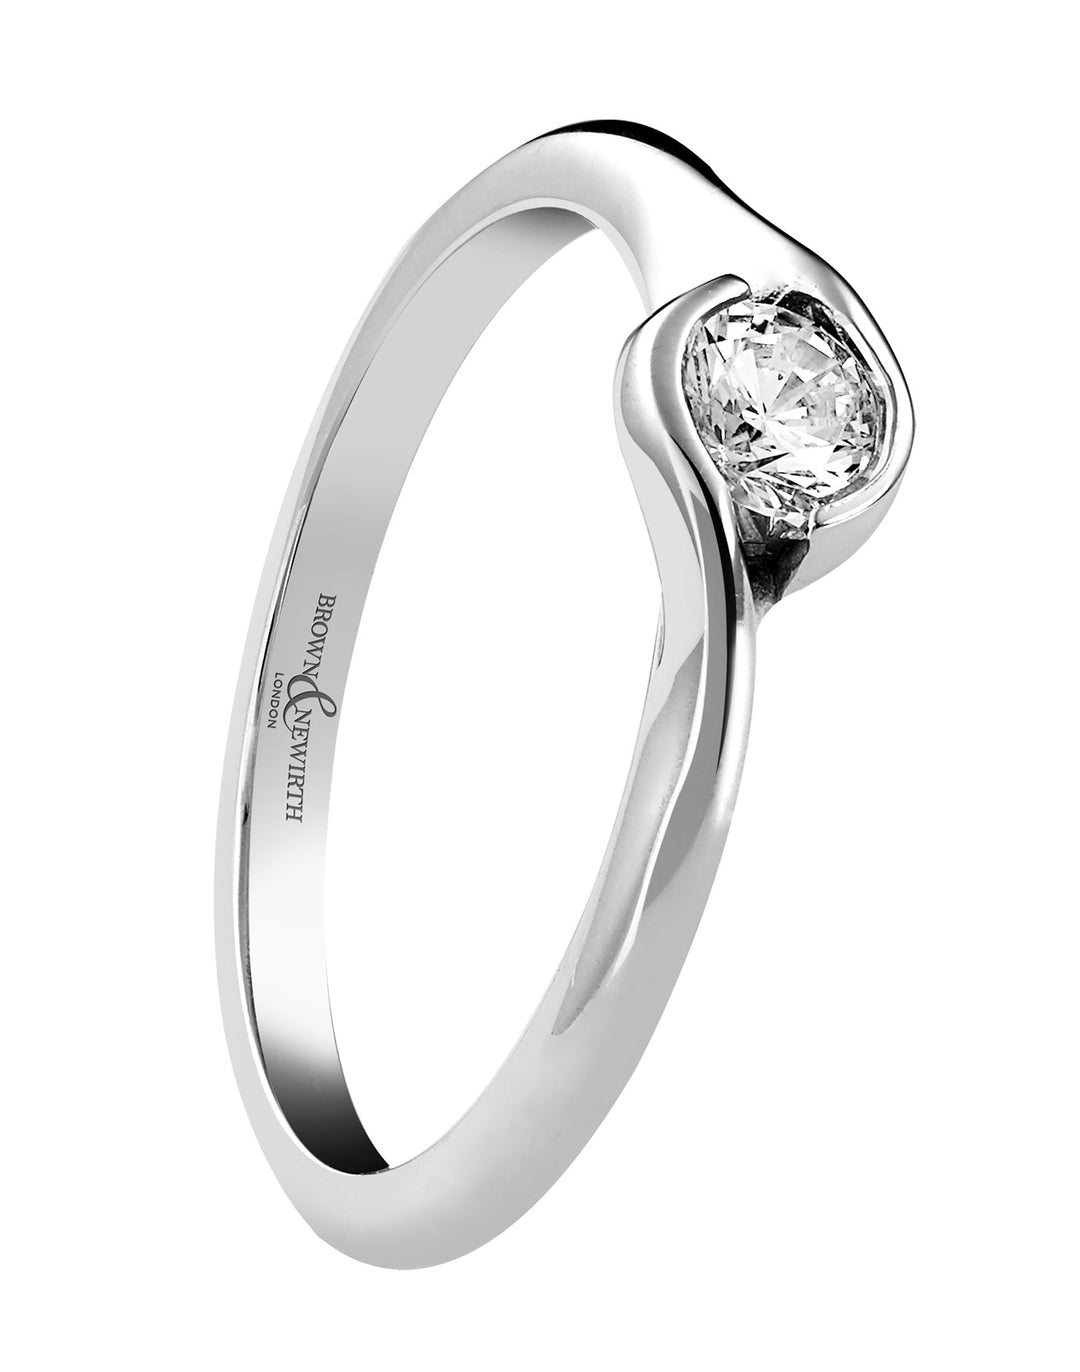 B&N Sunset Engagement Ring